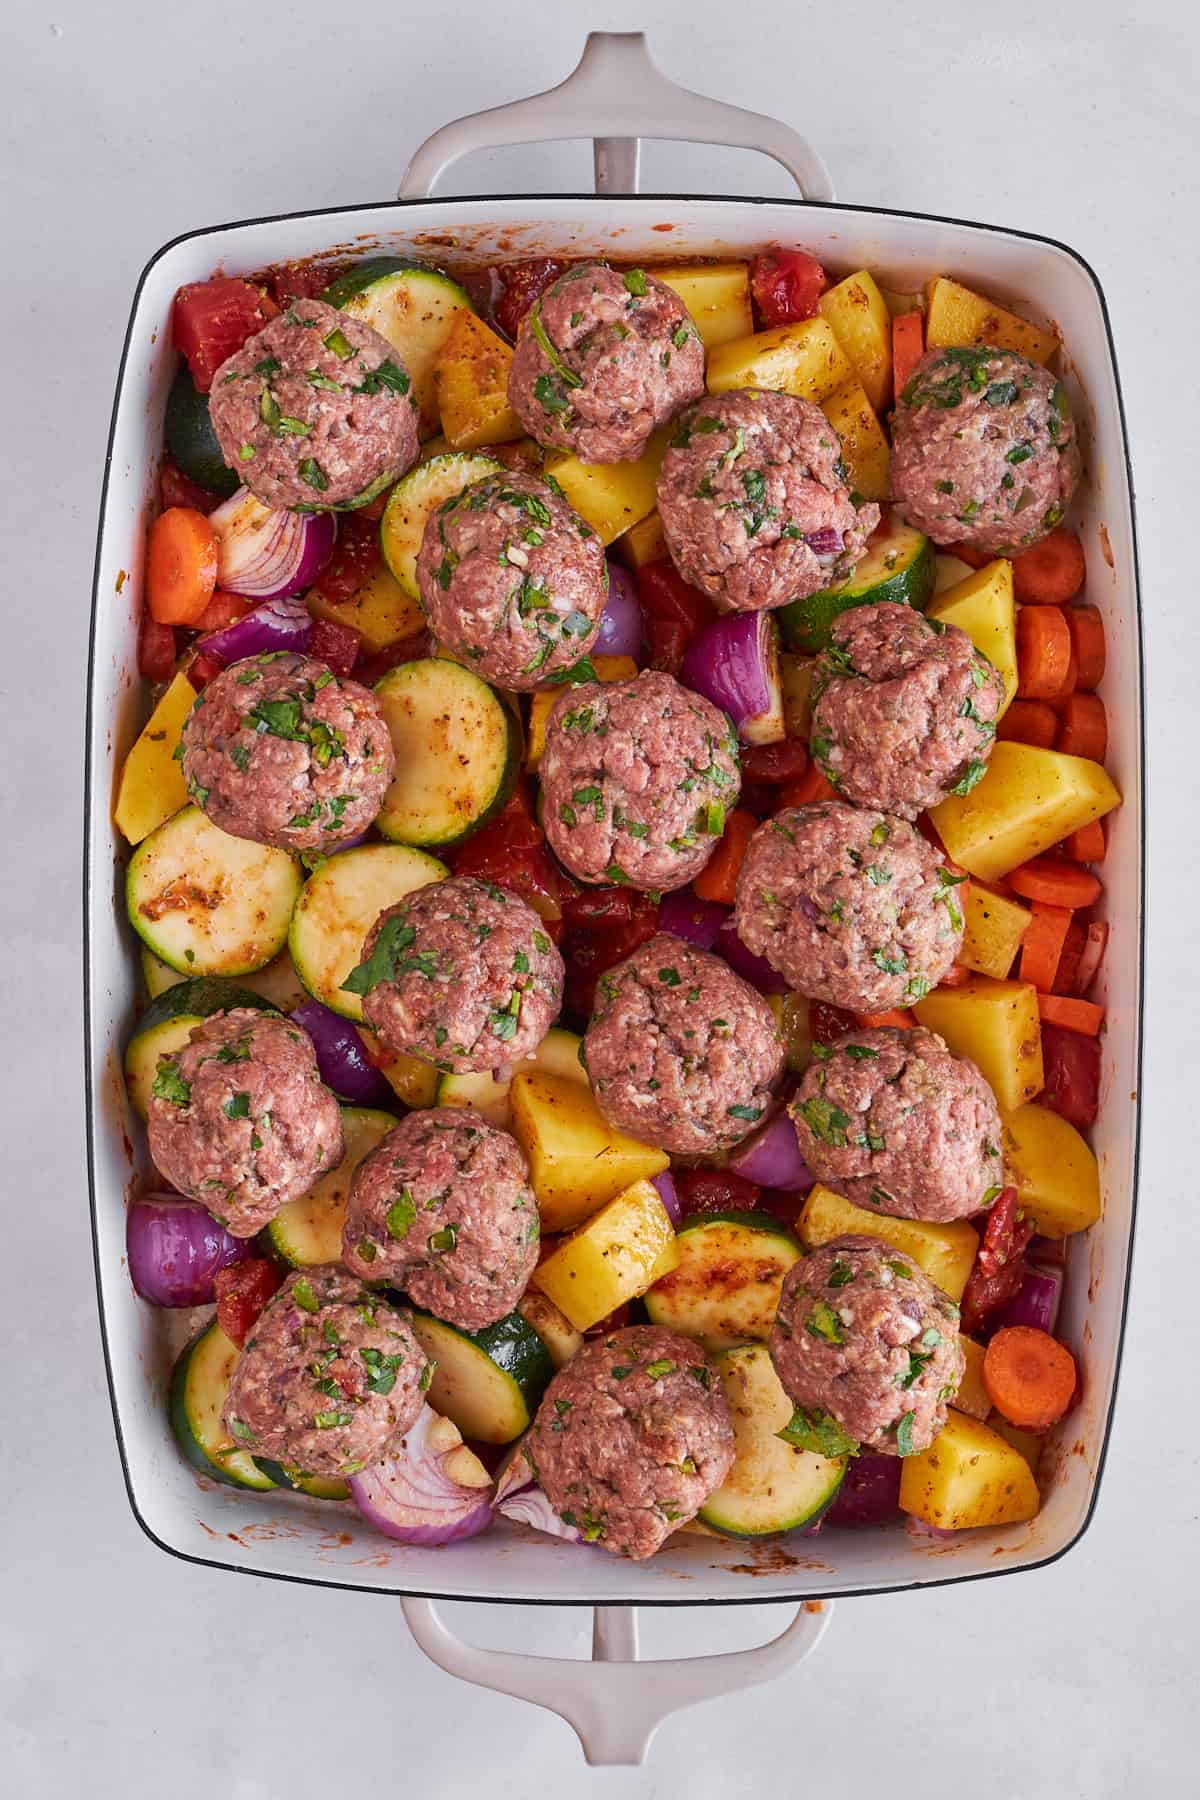 Raw seasoned veggies and raw beef kofta meatballs in a baking dish. 